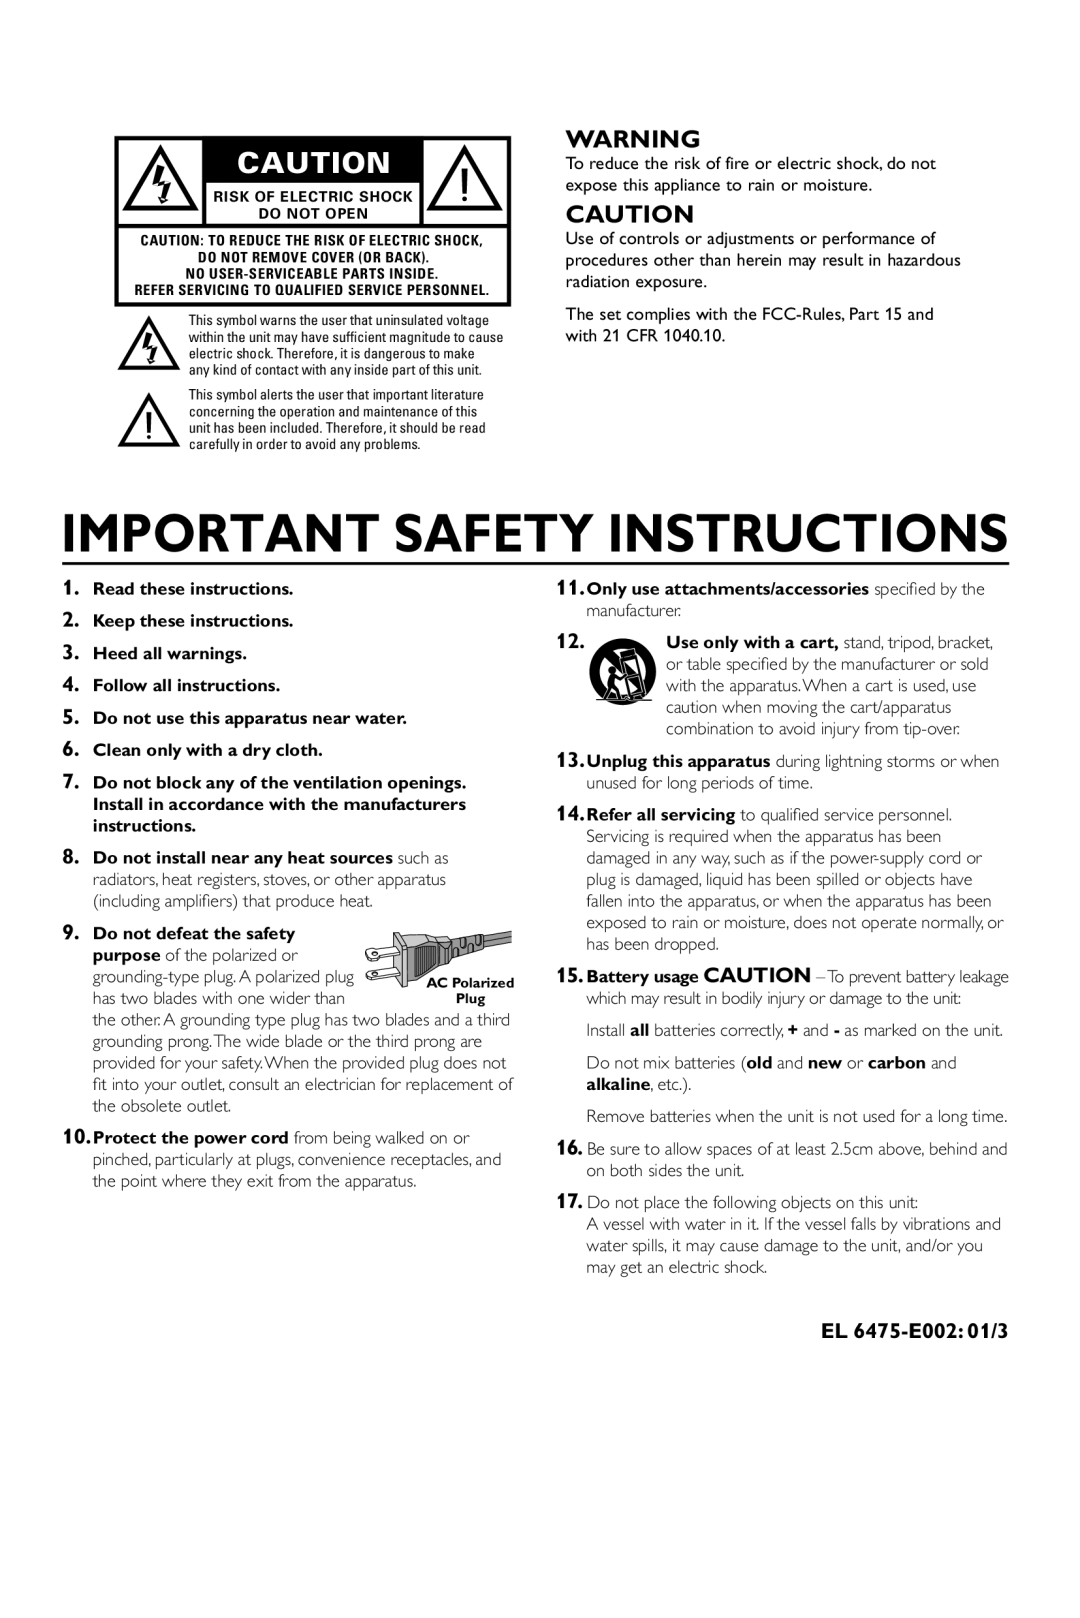 Yamaha DV-S5650 EL 6475-E002 01/3, Important Safety Instructions, Read these instructions 2. Keep these instructions 